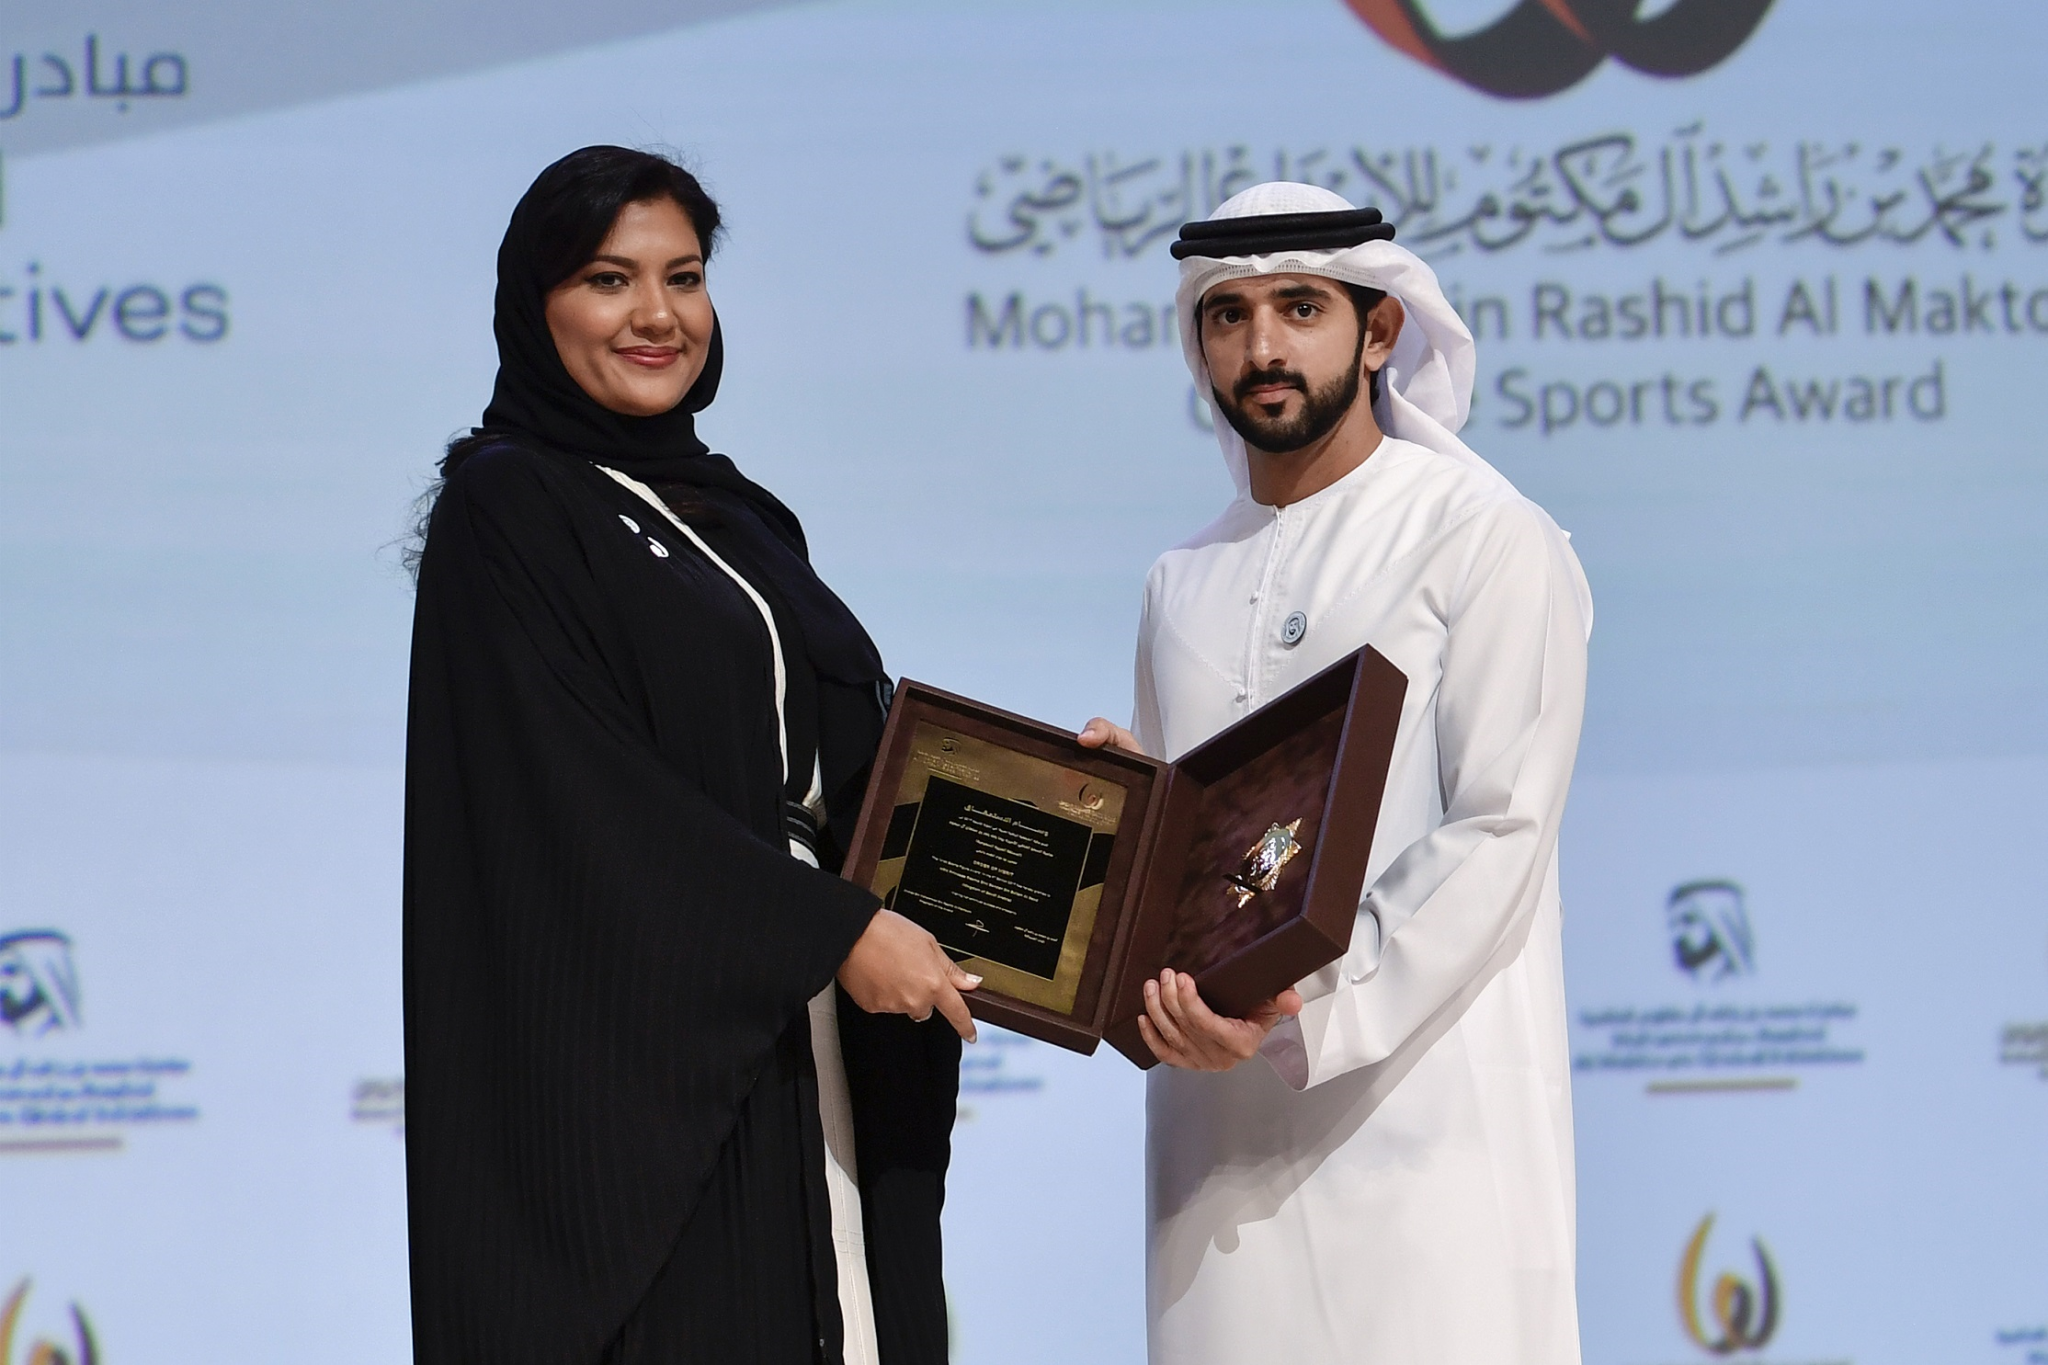 Mohammed Bin Rashid Al Maktoum Creative Sports Award organisers pledge to empower women